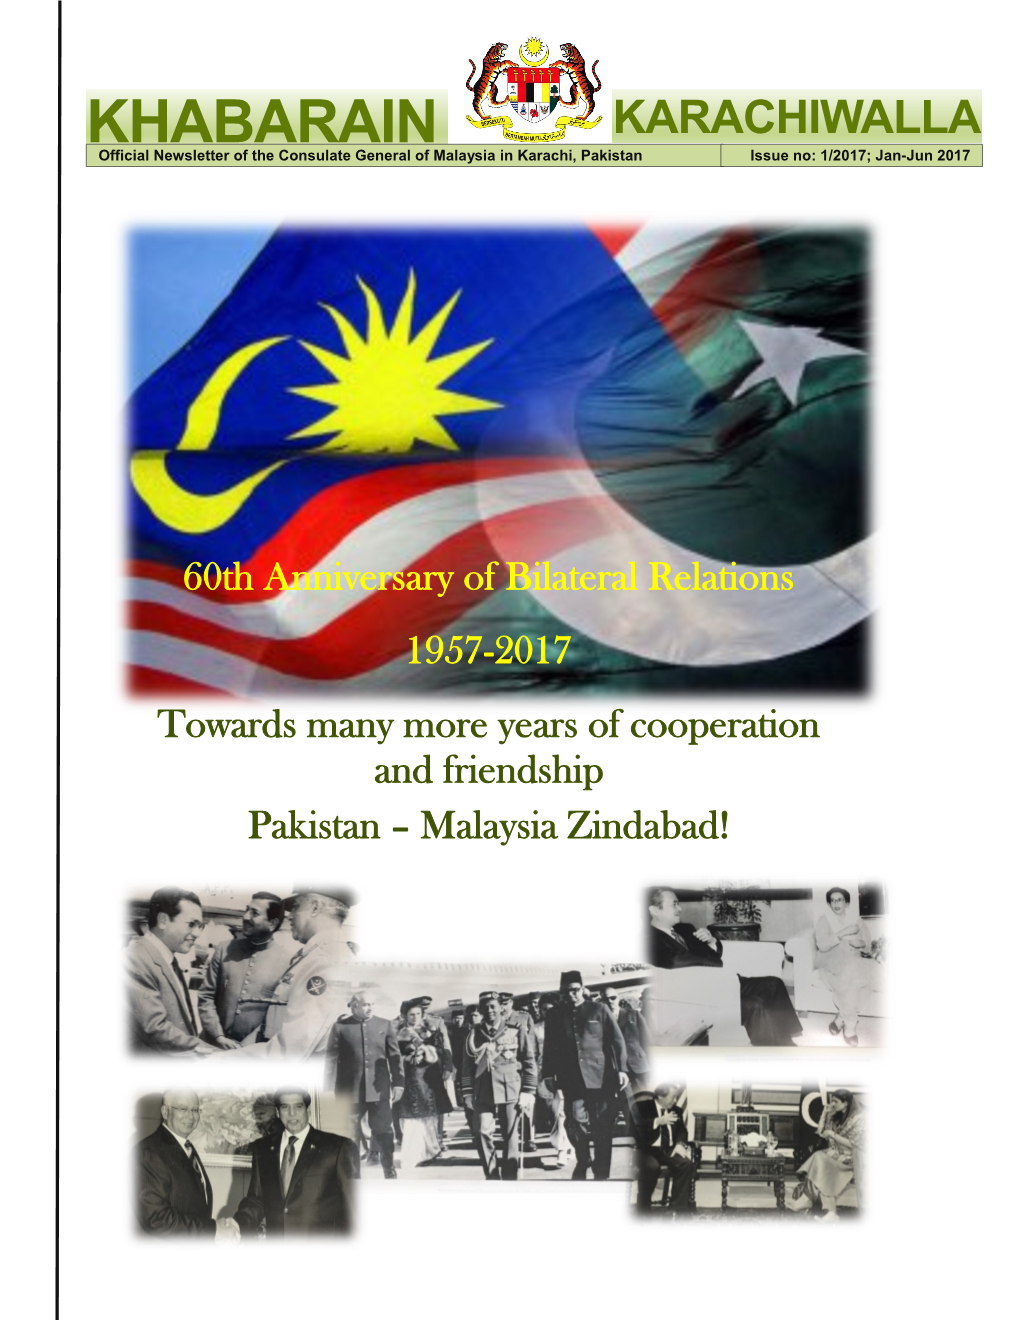 KHABARAIN KARACHIWALLA Official Newsletter of the Consulate General of Malaysia in Karachi, Pakistan Issue No: 1/2017; Jan-Jun 2017